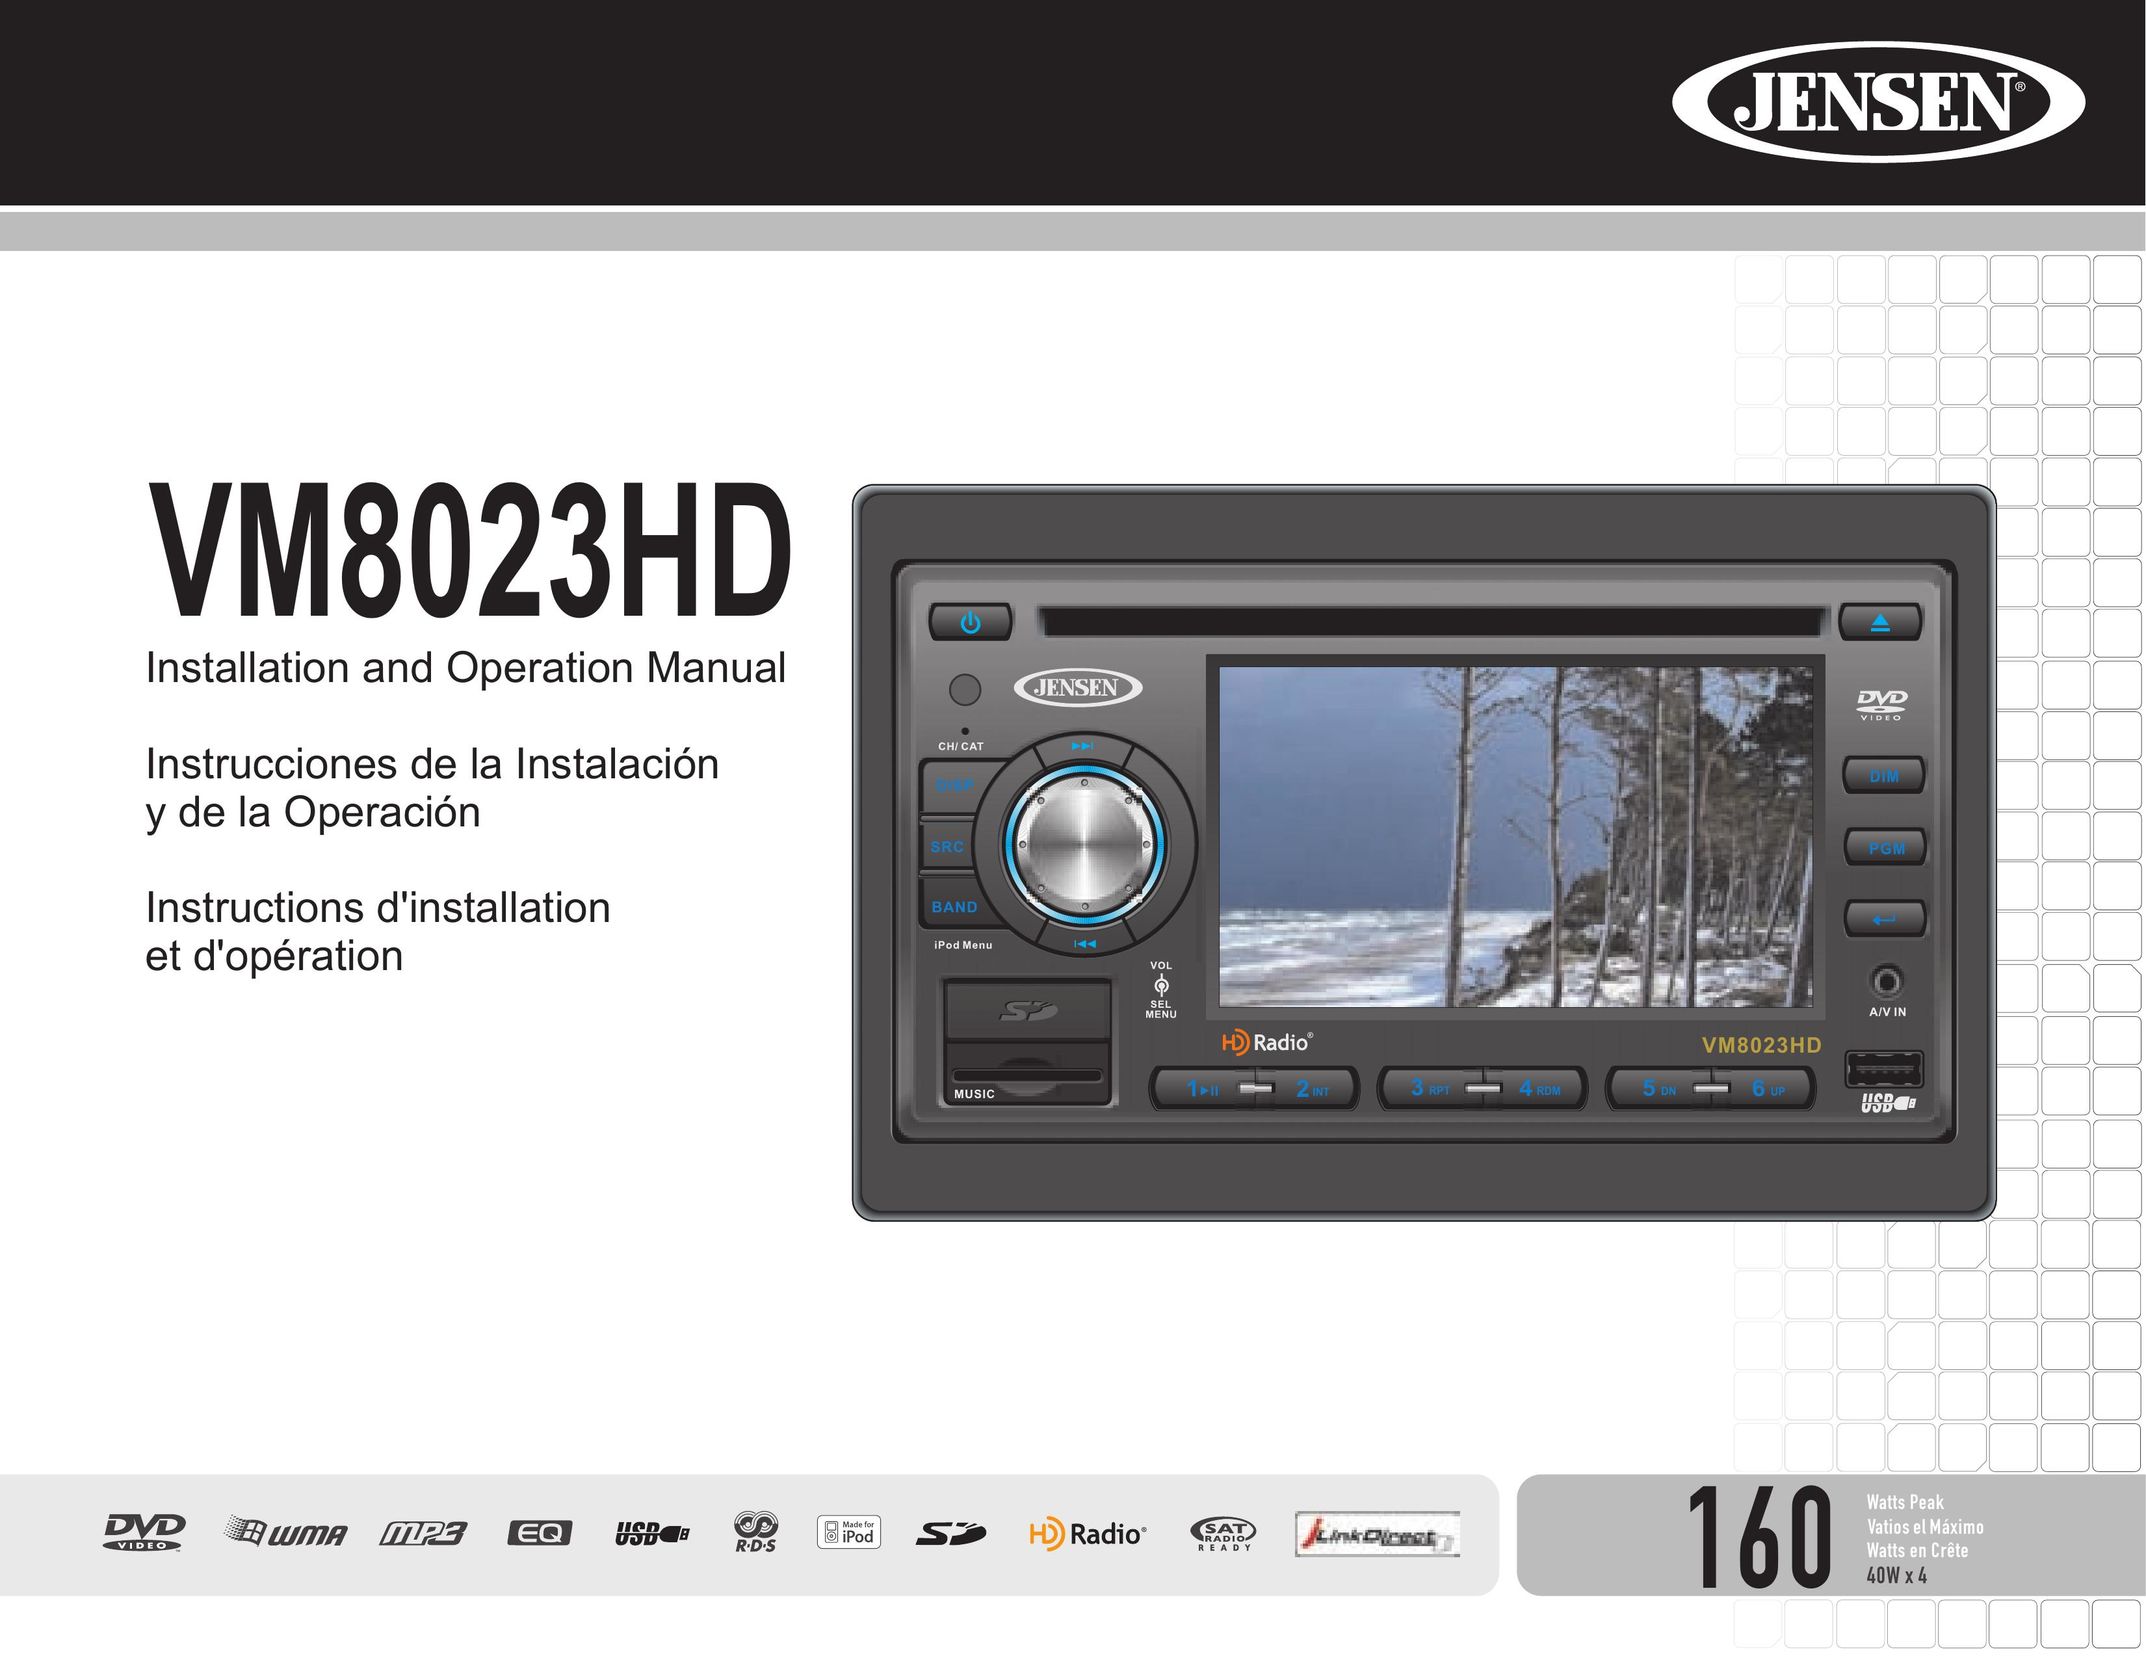 Jensen VM8023HD Car Video System User Manual